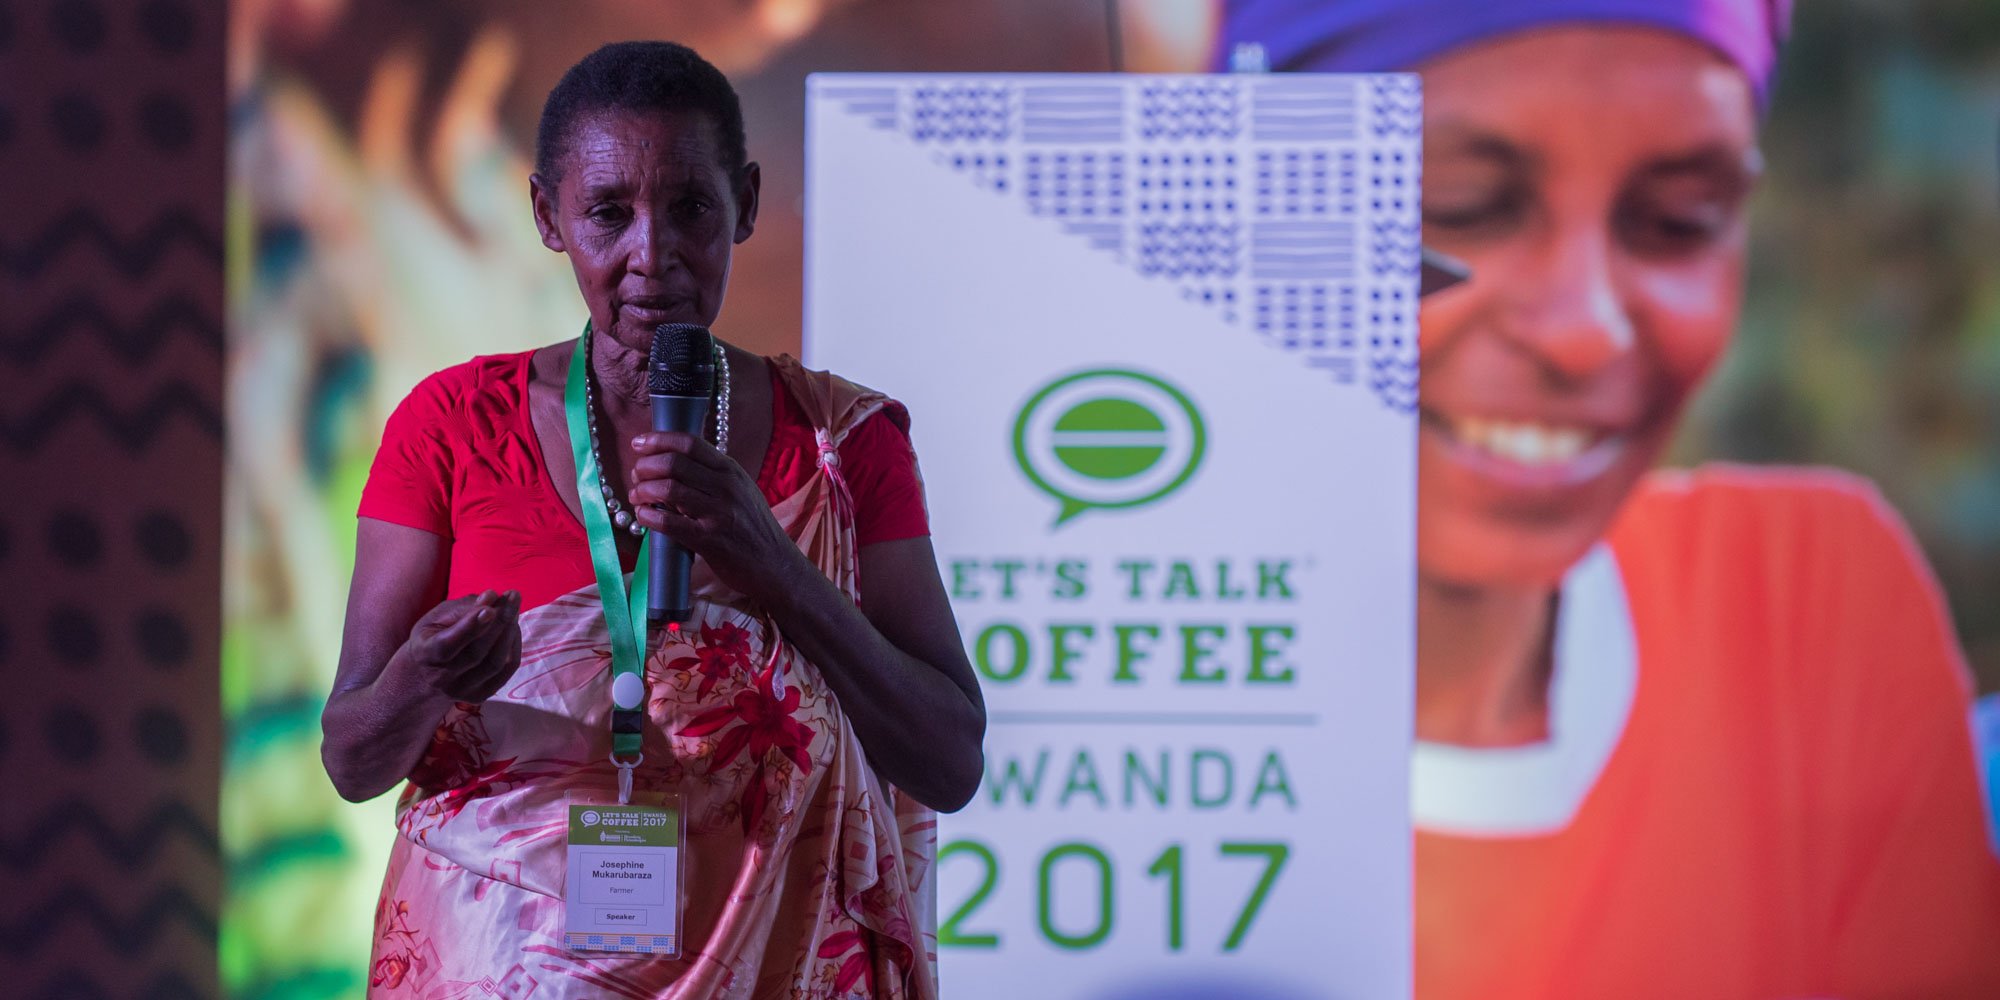 Let's Talk Coffee Rwanda 2017